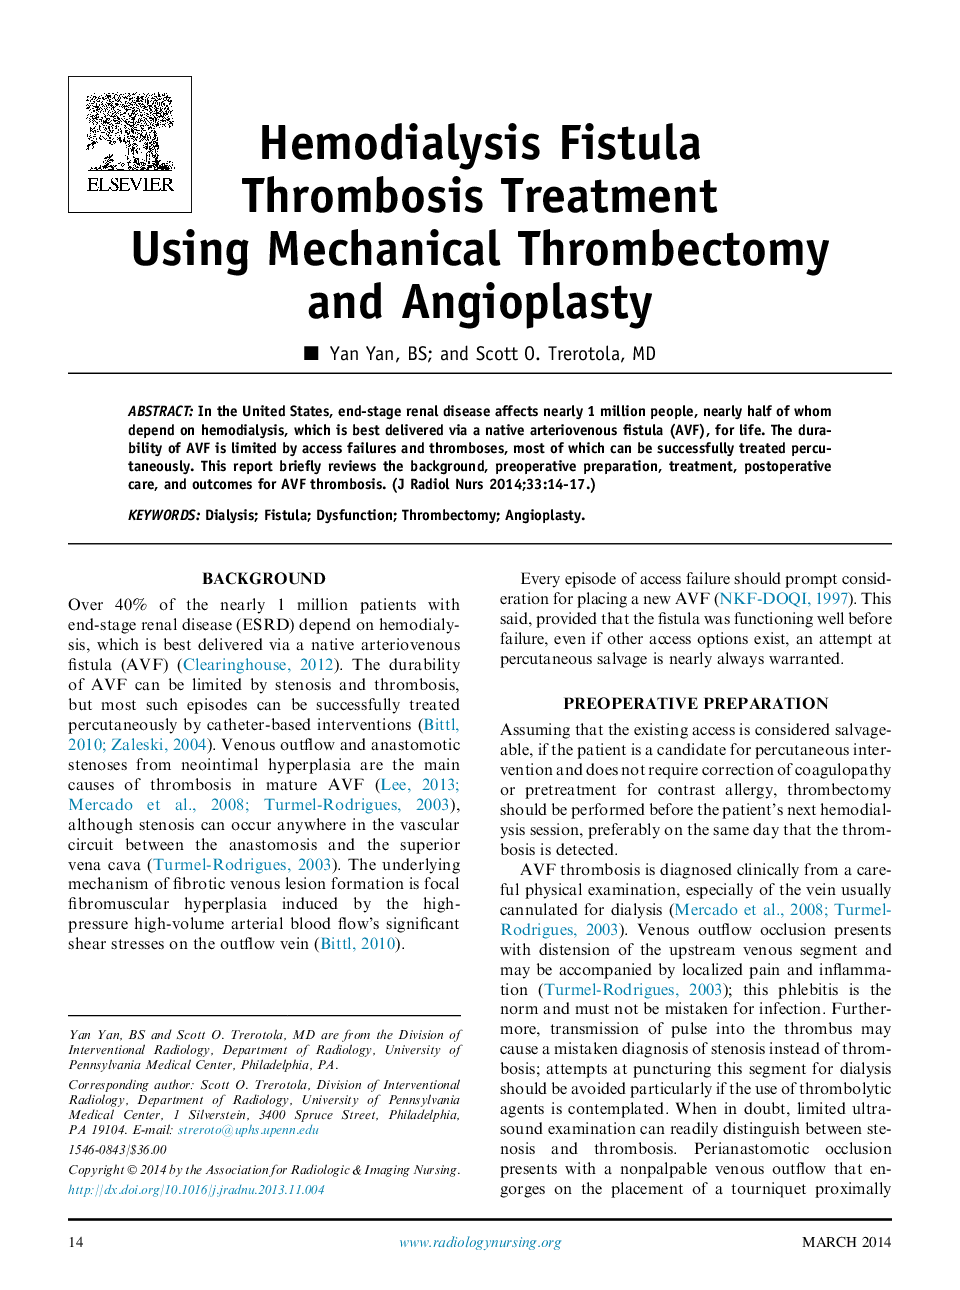 Hemodialysis Fistula Thrombosis Treatment Using Mechanical Thrombectomy and Angioplasty